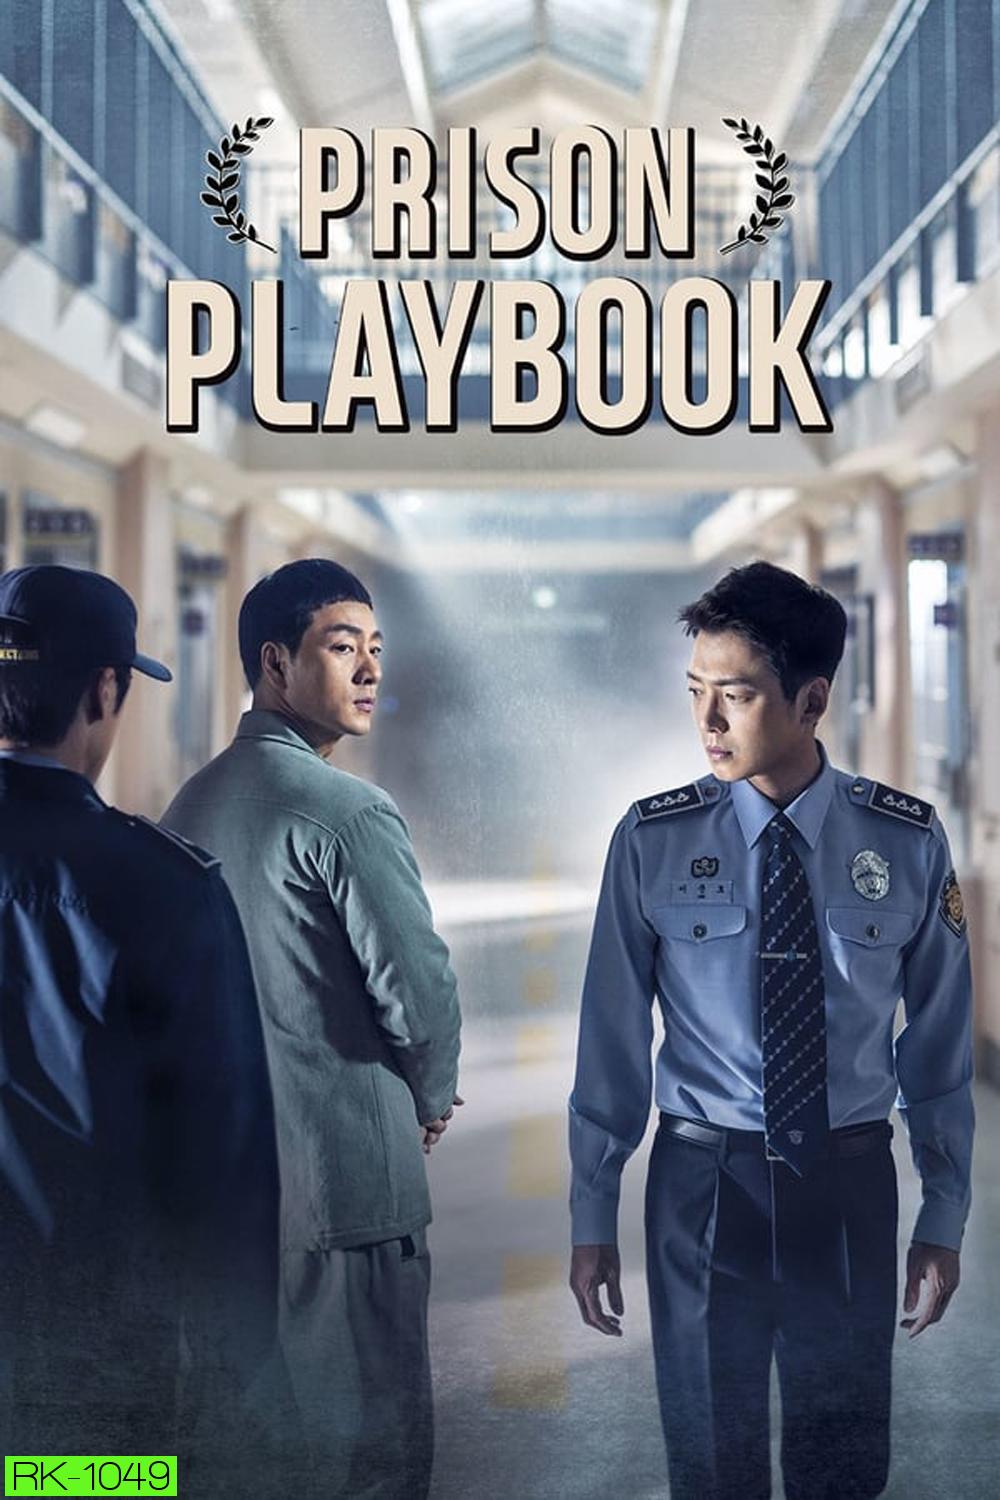 Prison Playbook ฟ้าพลิก ชีวิตยังต้องสู้ (2017)